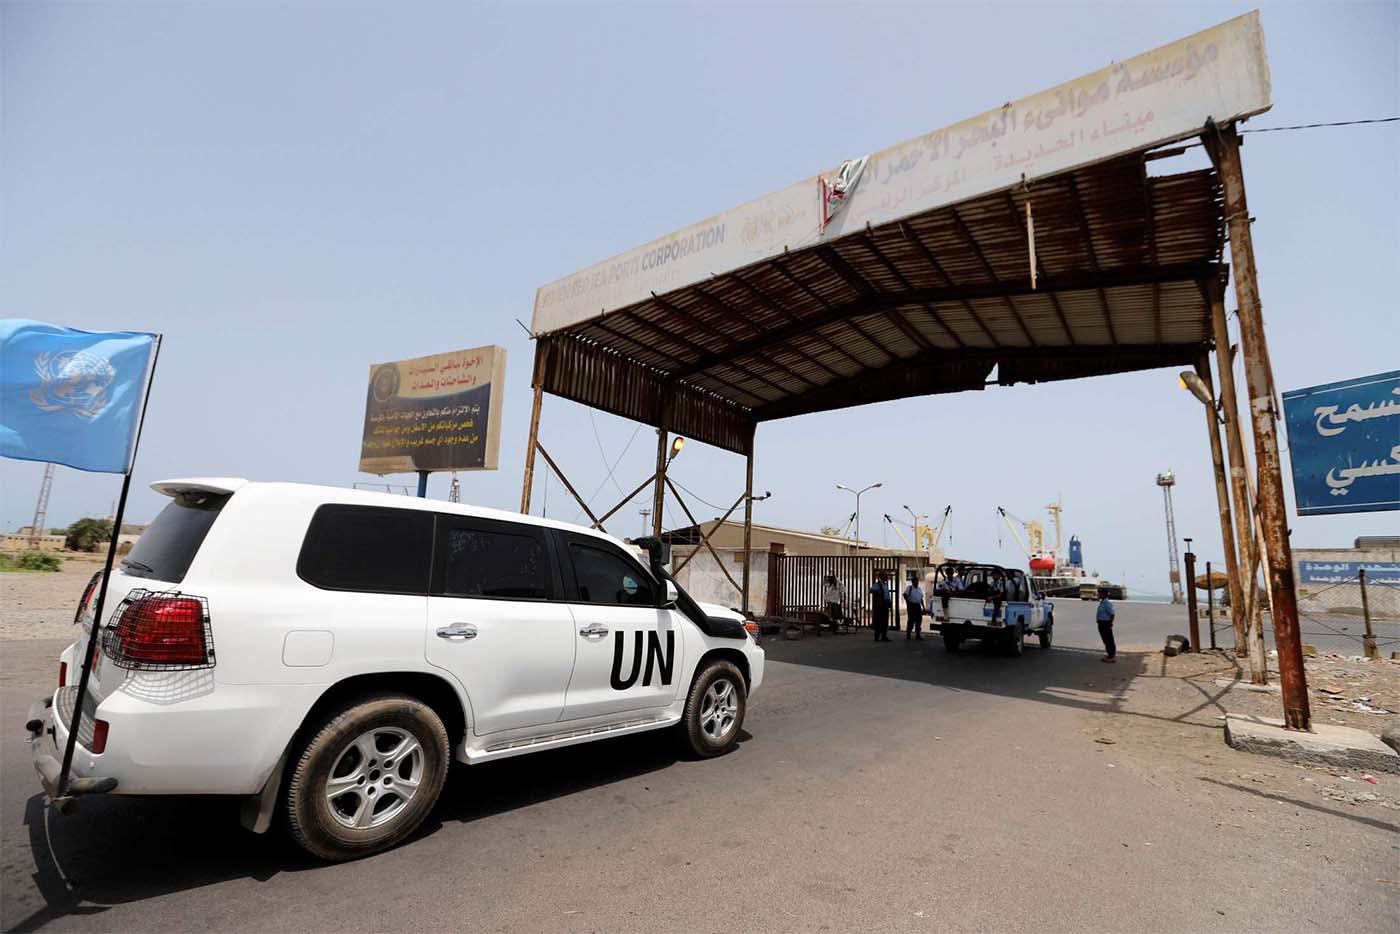 A UN vehicle is seen at Hodeidah port in Hodeidah